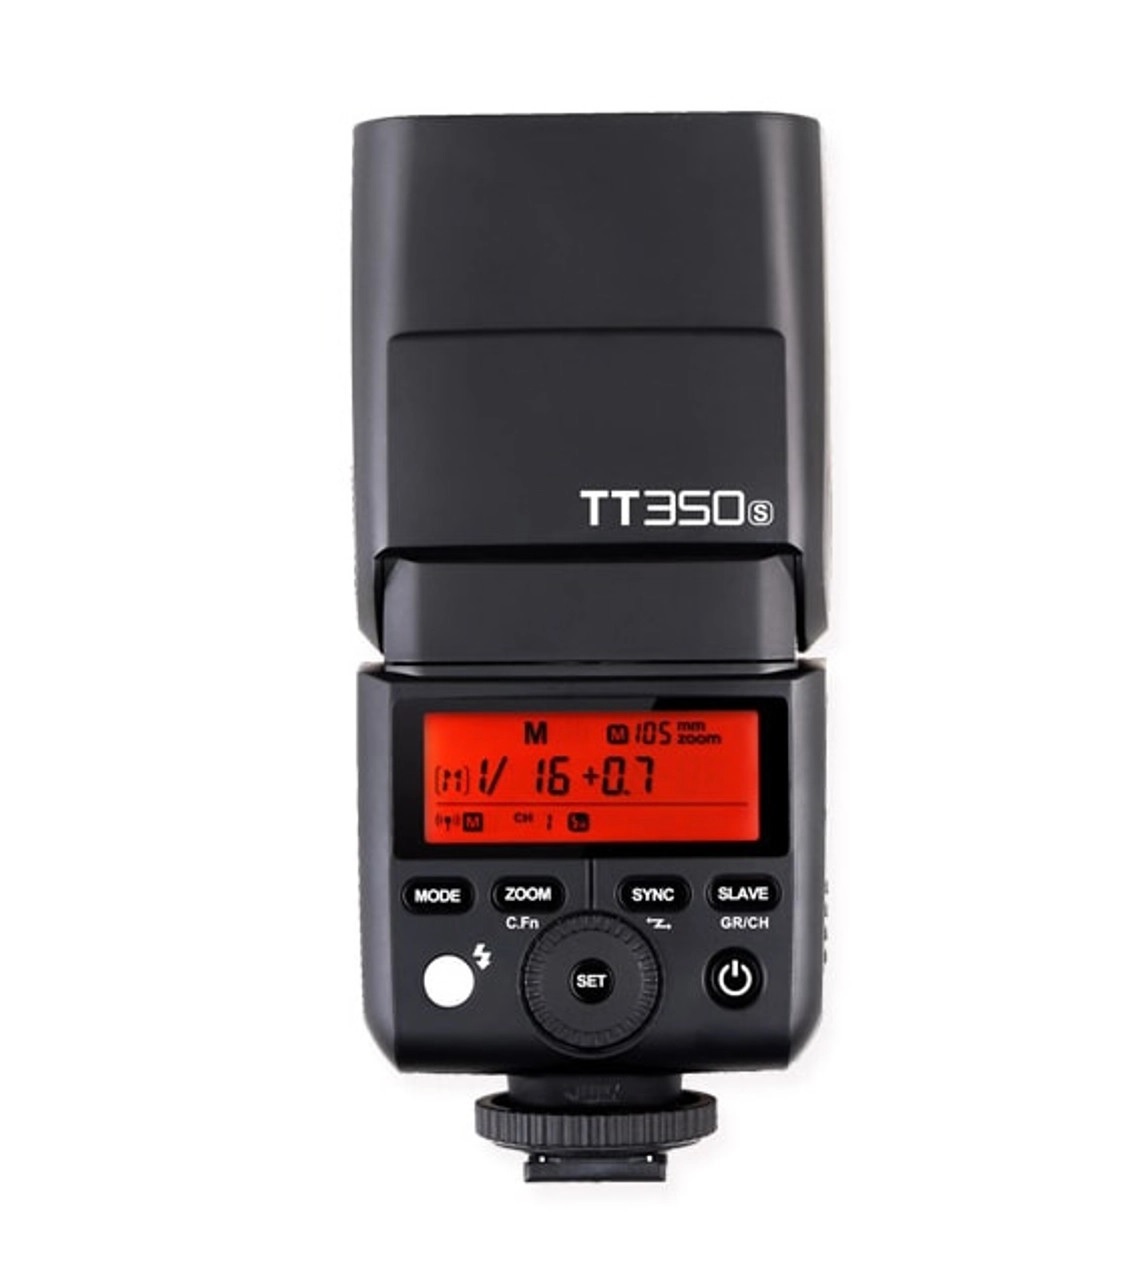 Godox TT350C Mini TTL Speedlite Flash - Canon